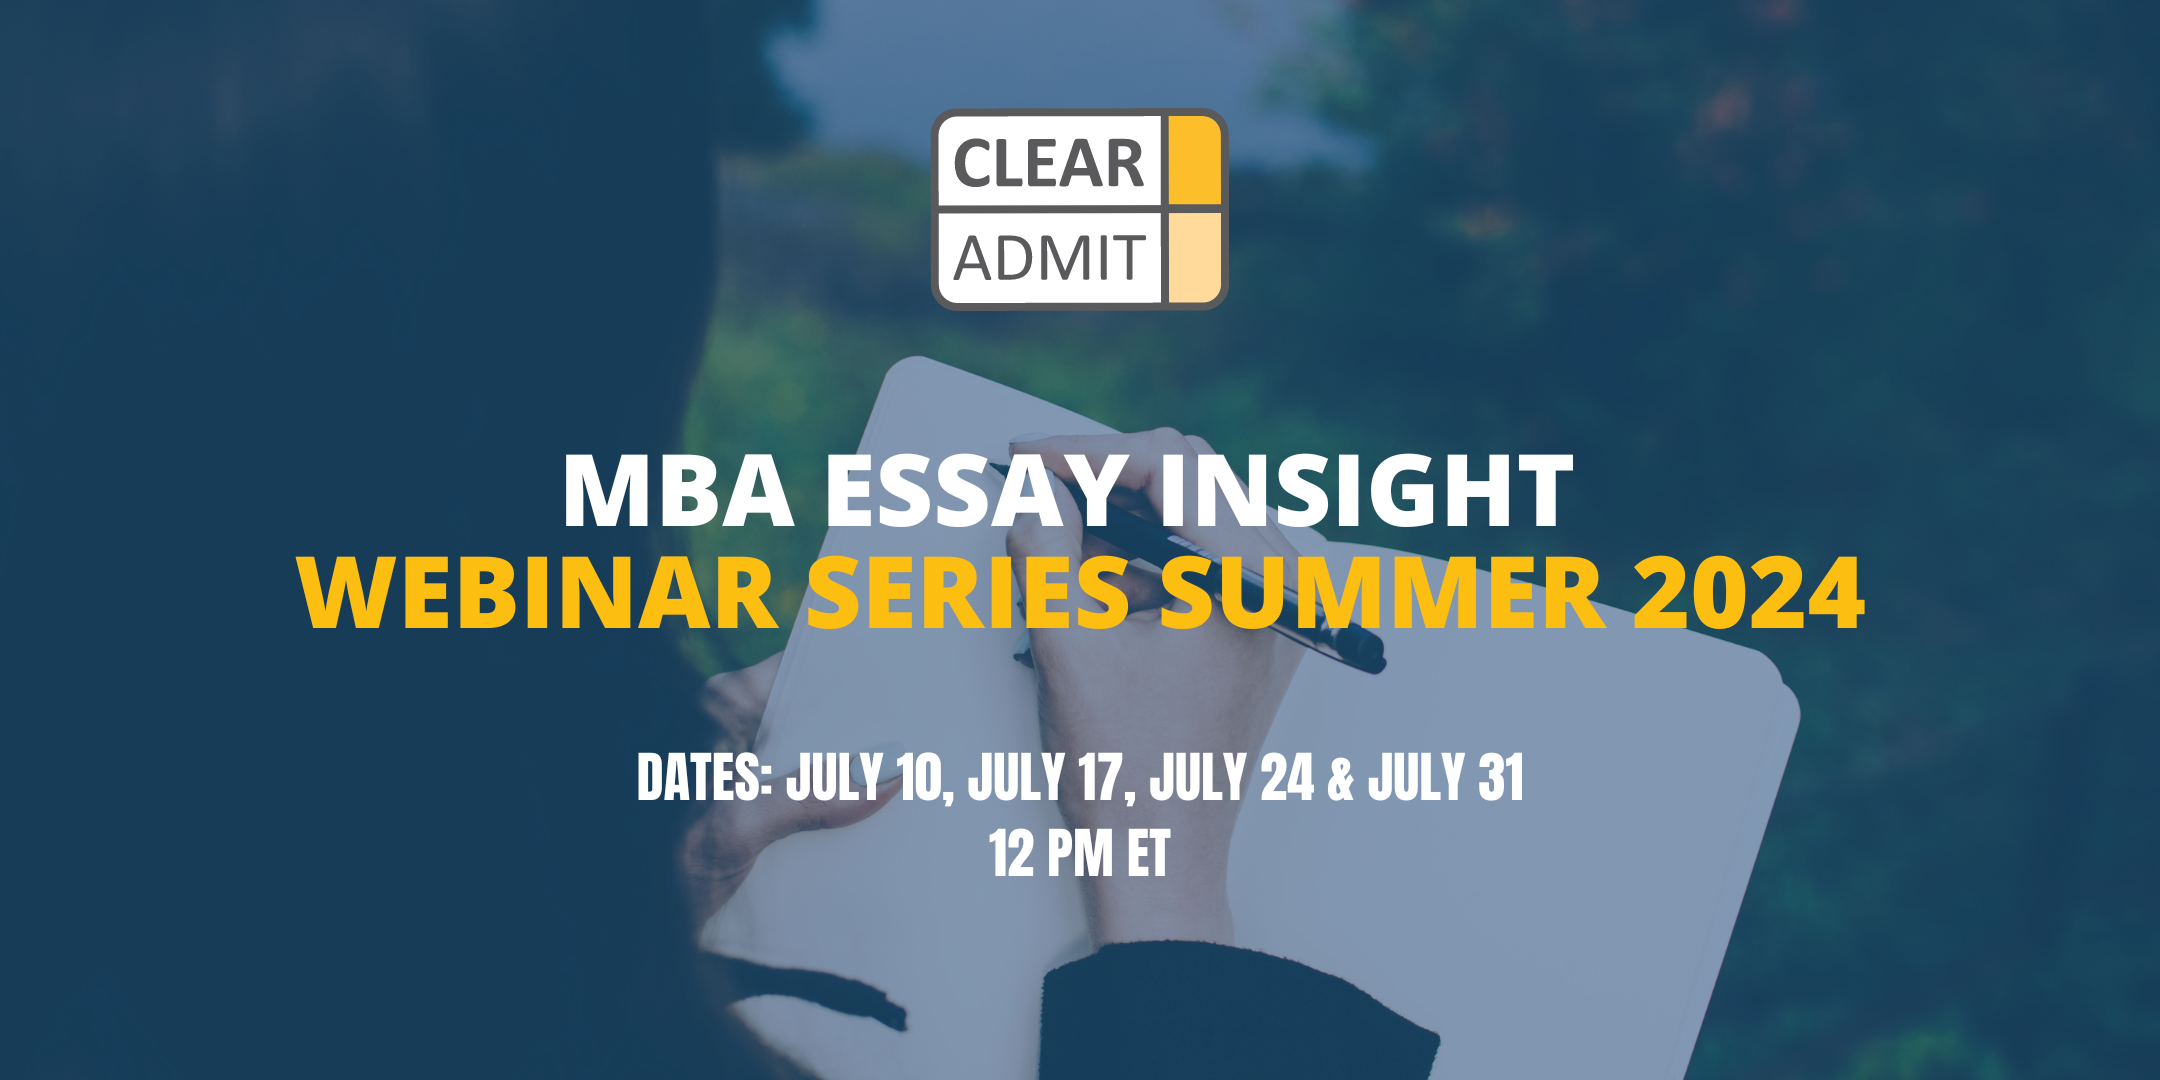 Image for MBA Essay Insight Webinar Series Summer 2024